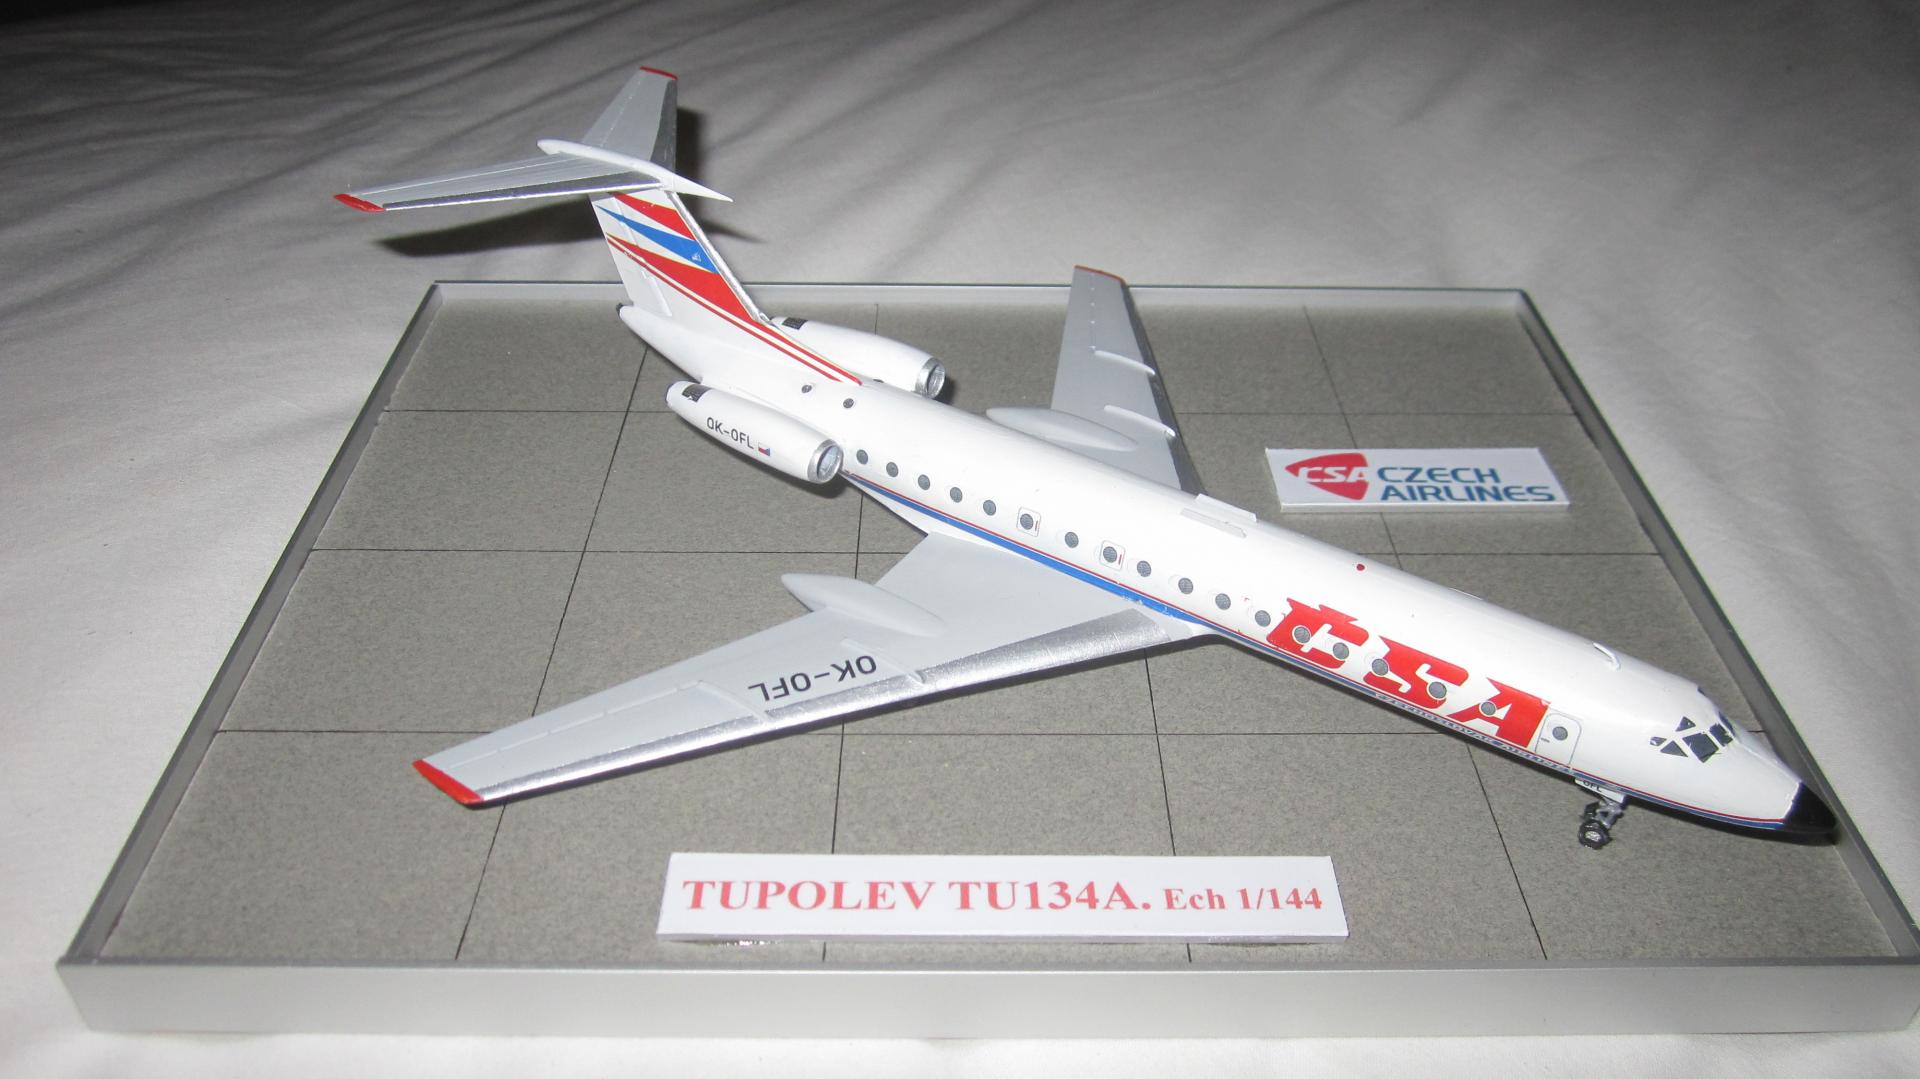 TUPOLEV TU 134A